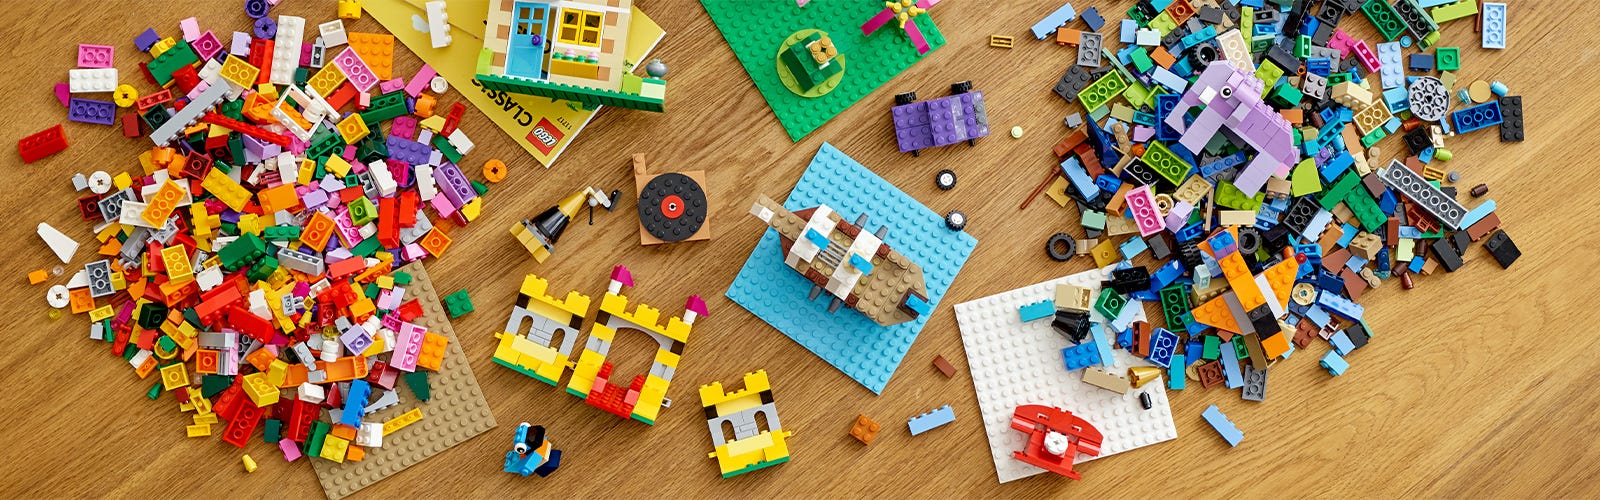 How to build a DIY fidget toy | Official Shop US